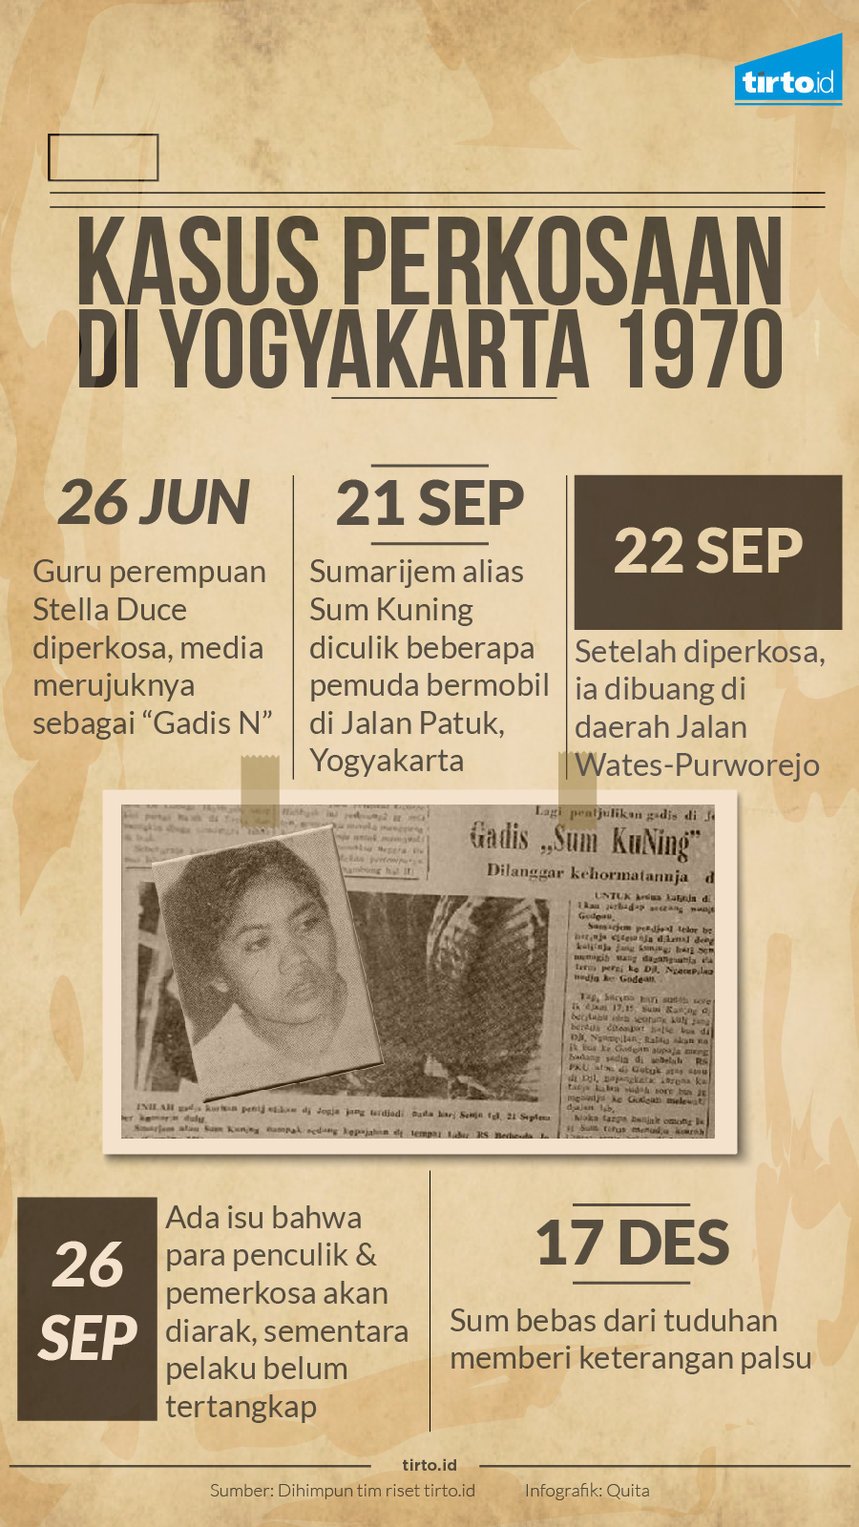 Infgrafik Kasus perkosaan di yogyakarta 1970